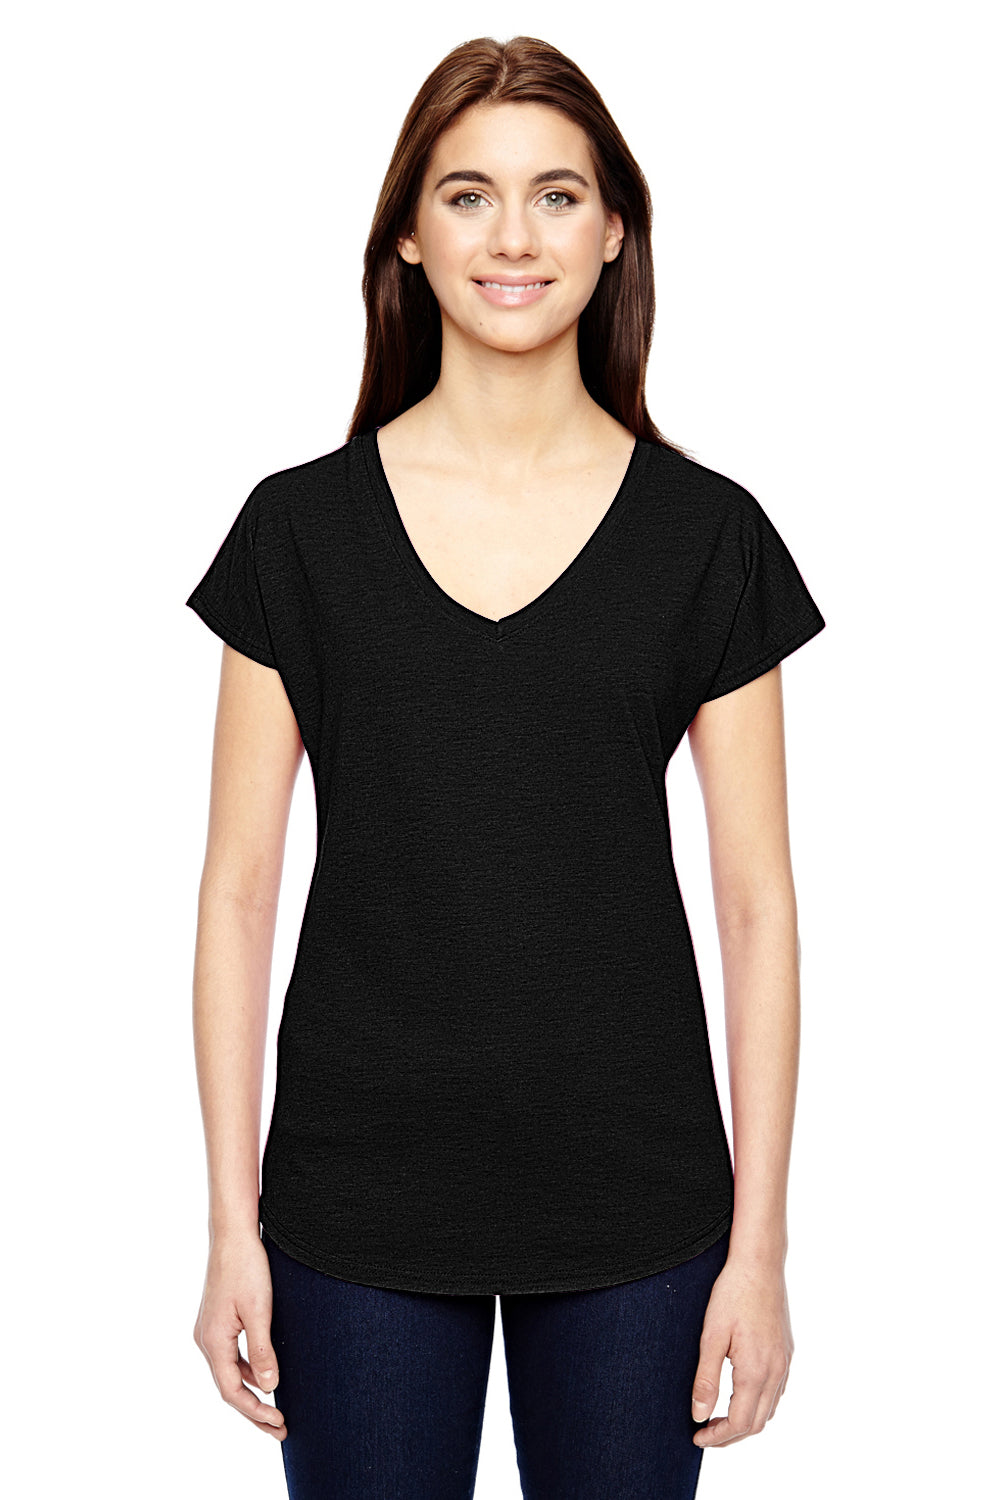 Anvil 6750VL Womens Short Sleeve V-Neck T-Shirt Black Front